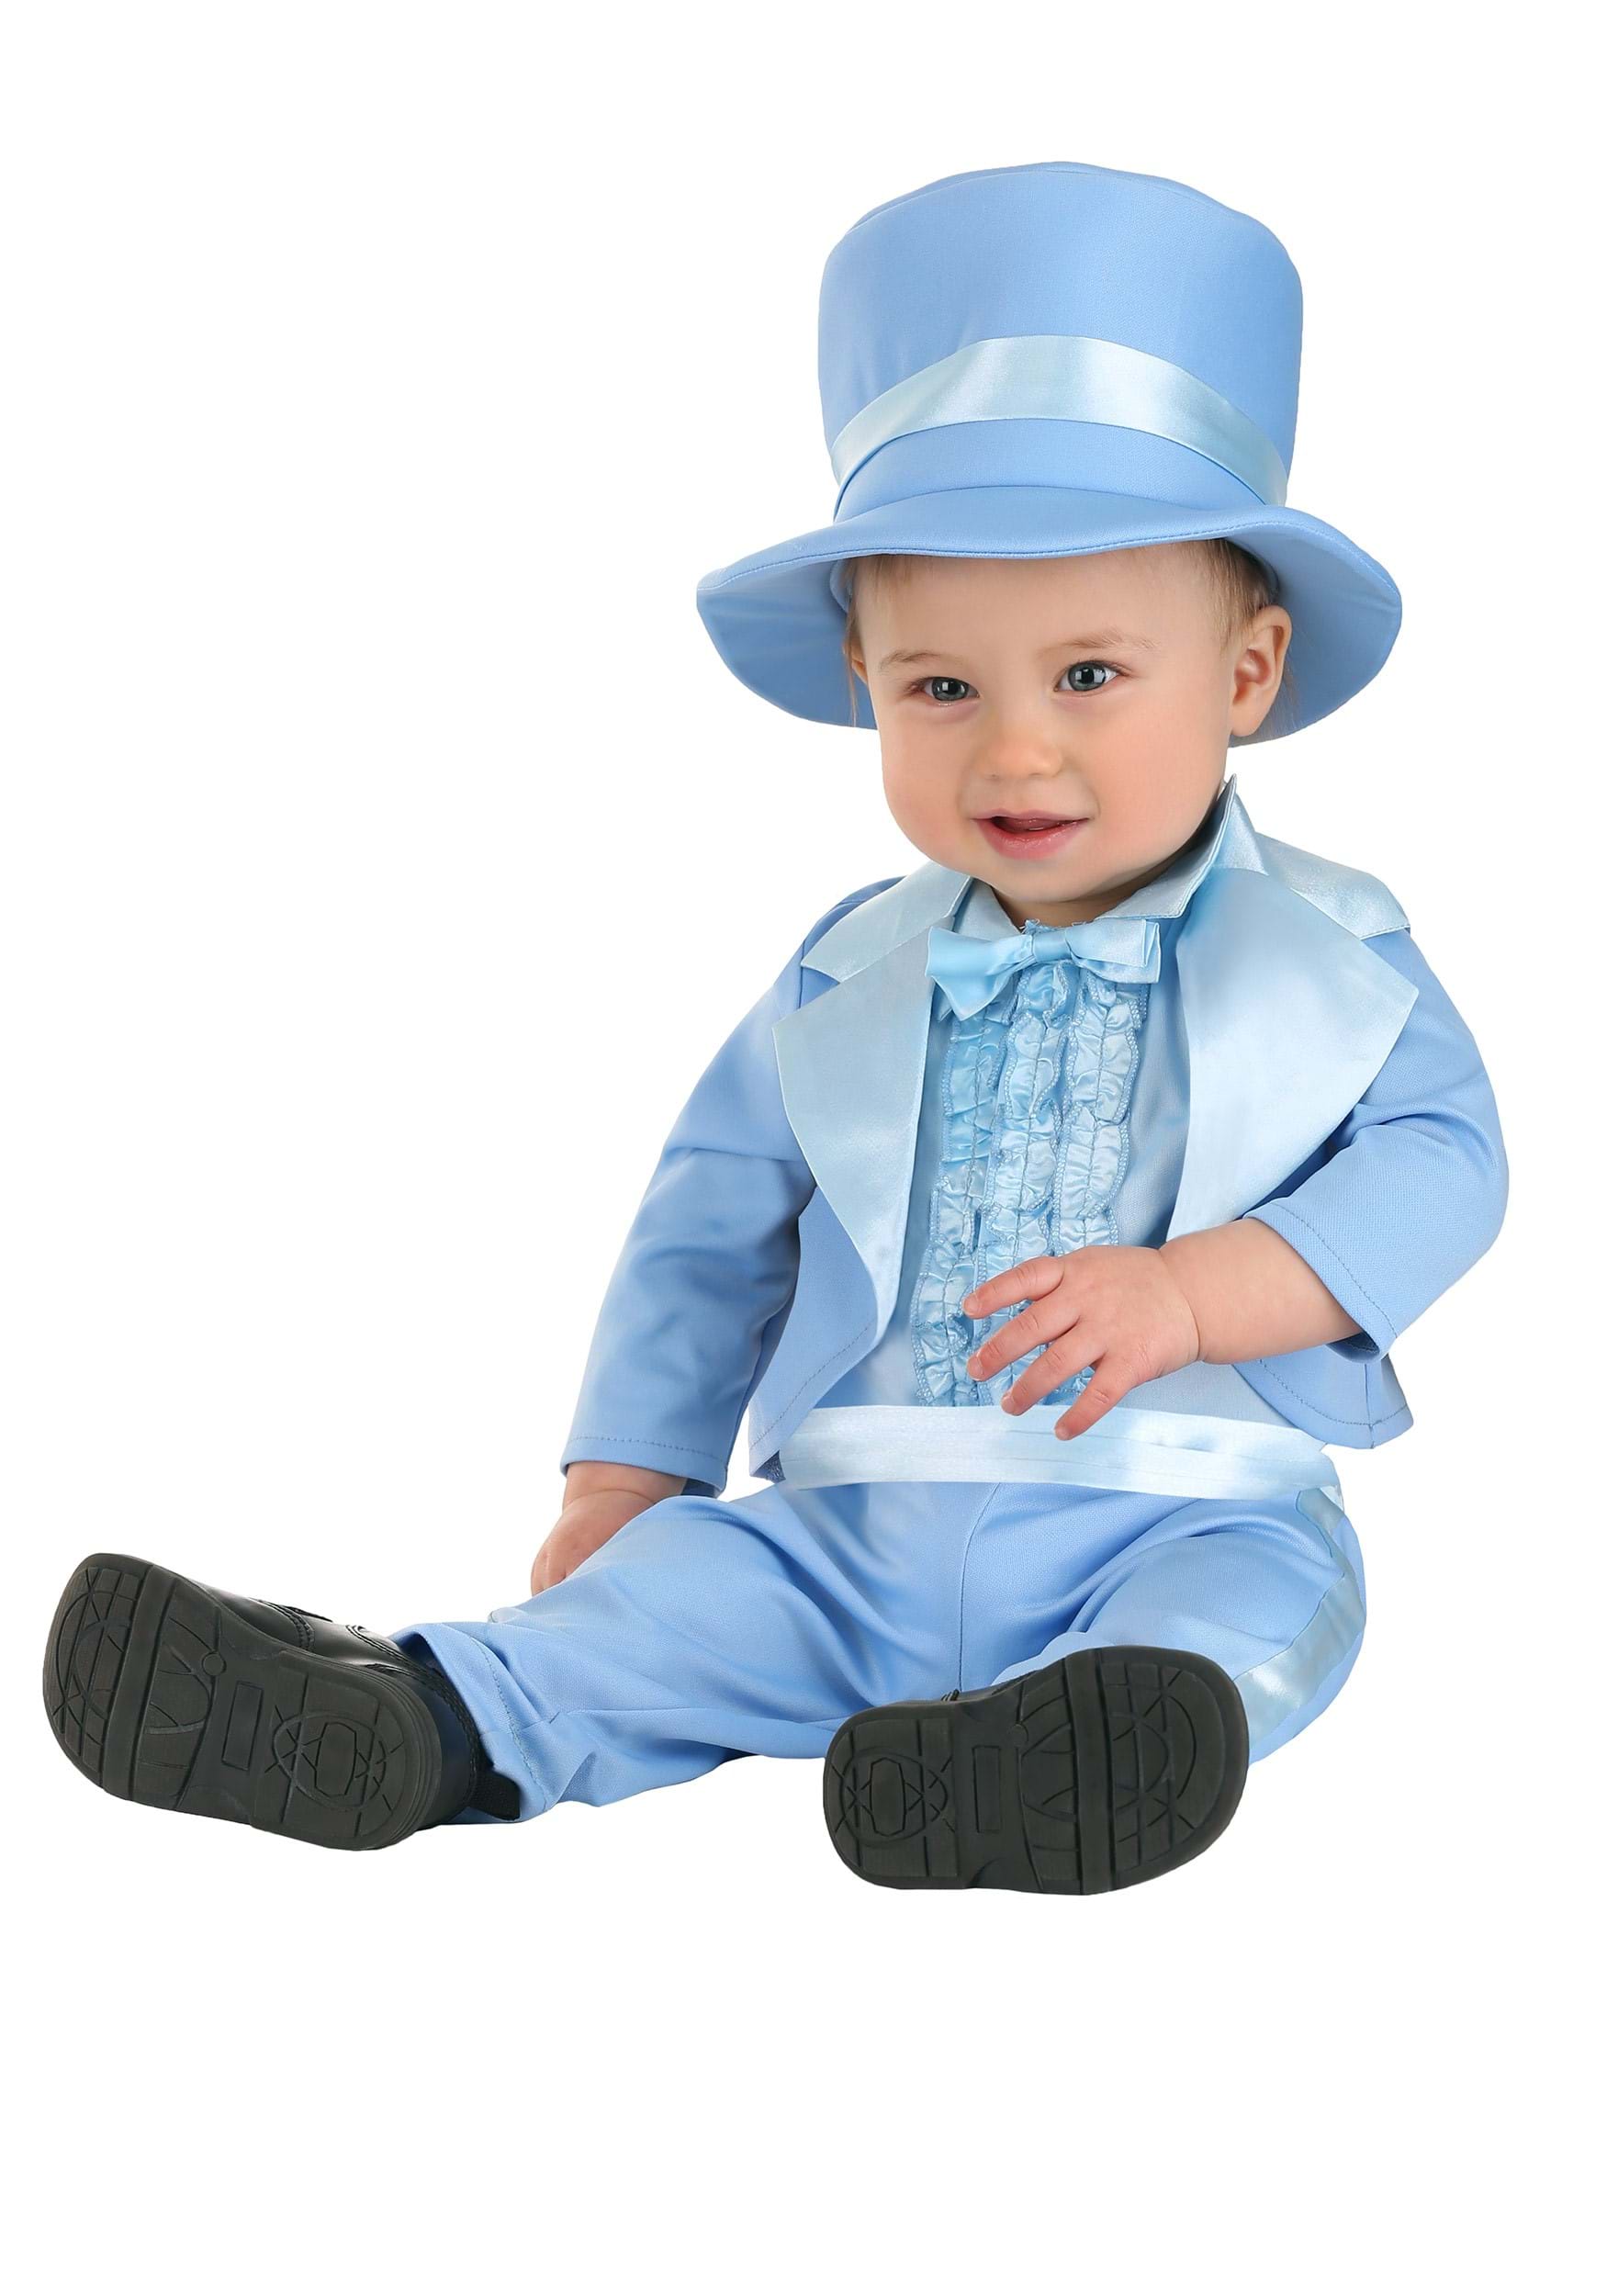 Photos - Fancy Dress FUN Costumes Powder Blue Baby Suit Costume Blue FUN1725IN